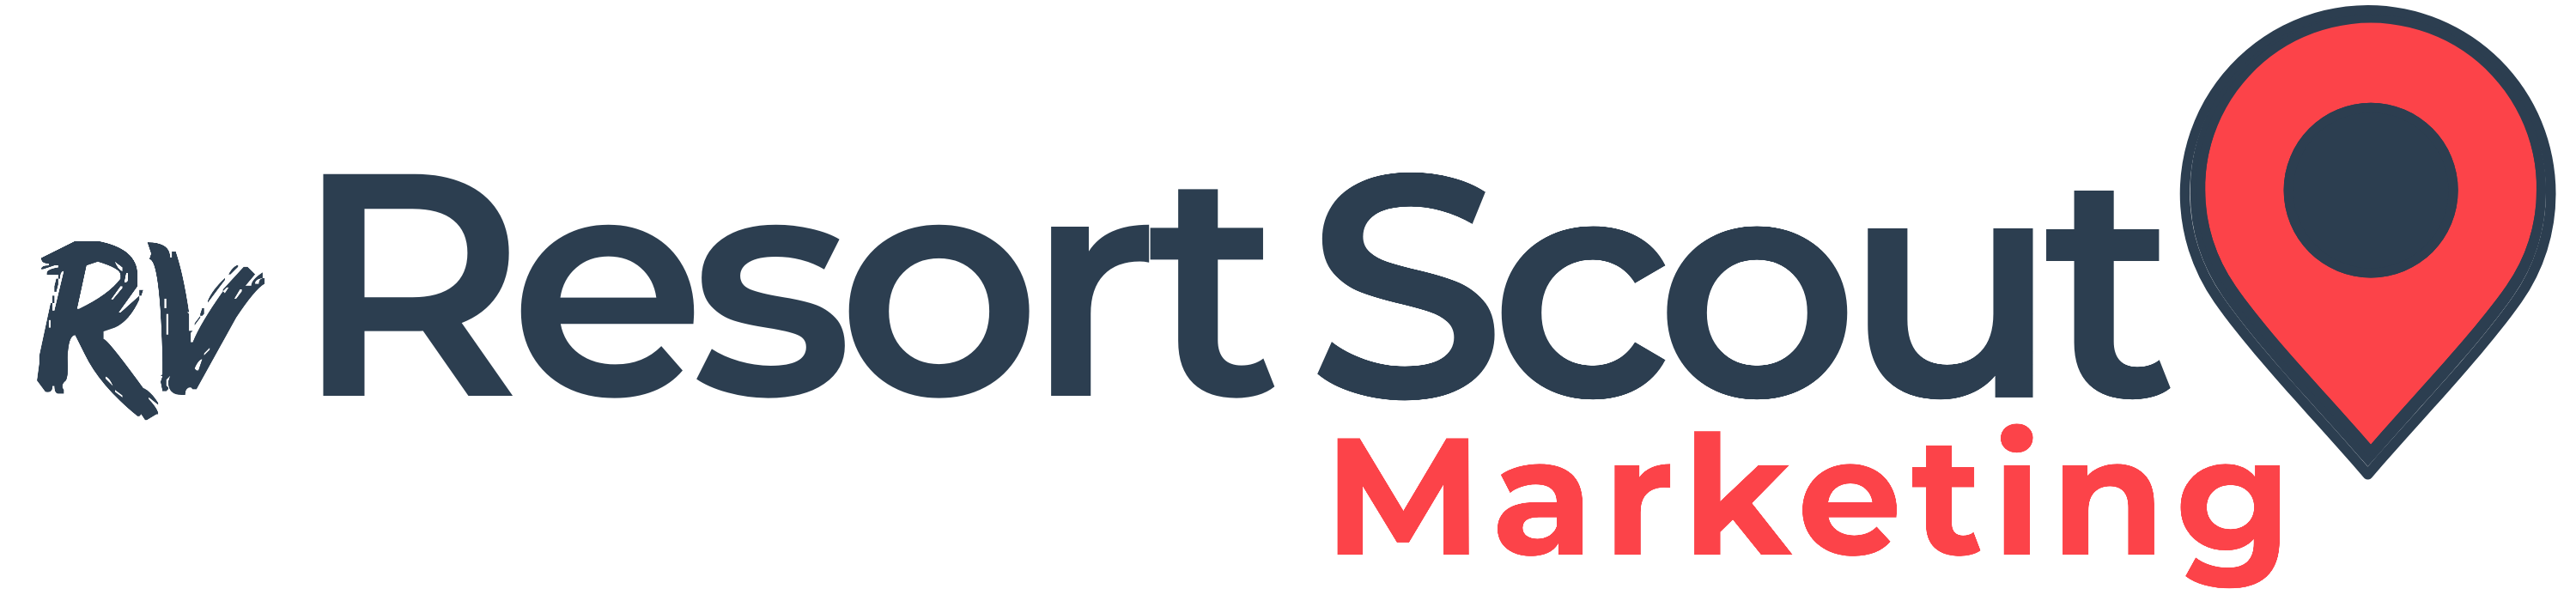 RV Resort Scout Marketing Logo